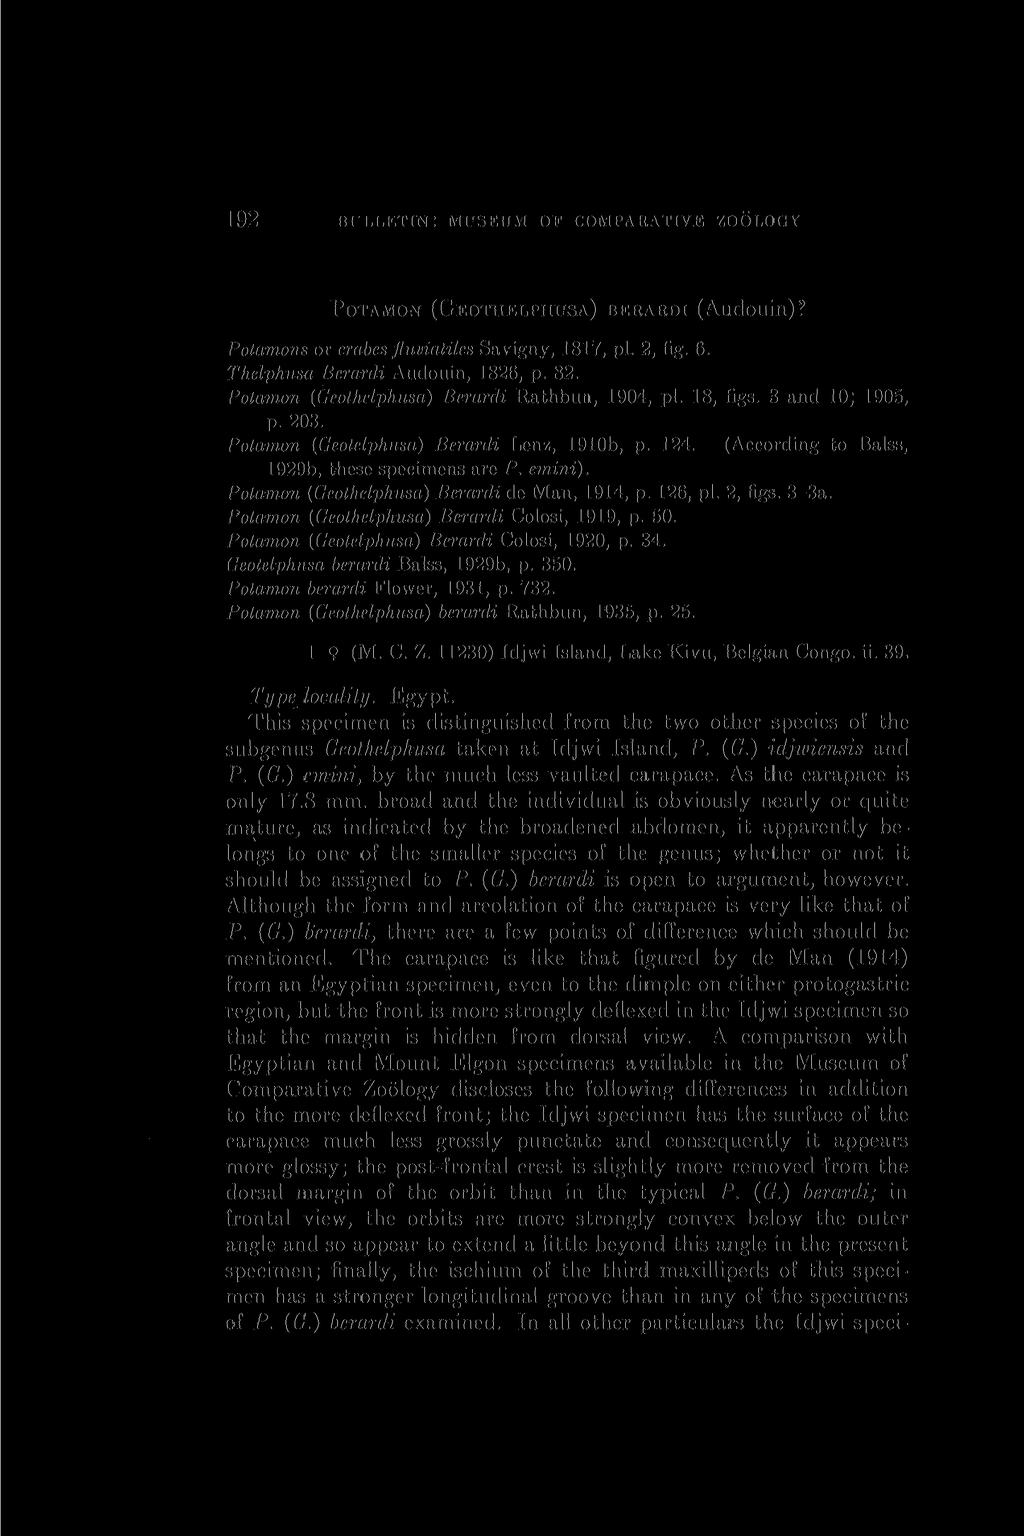 192 BULLETIN: MUSEUM OF COMPARATIVE ZOOLOGY POTAMON (GEOTHELPHUSA) BERARDI (Audouin)? Potamon s or erabes fluviatiles Savigny, 1817, pi. 2, fig. 6. Thelphusa Berardi Audouin, 1826, p. 82.